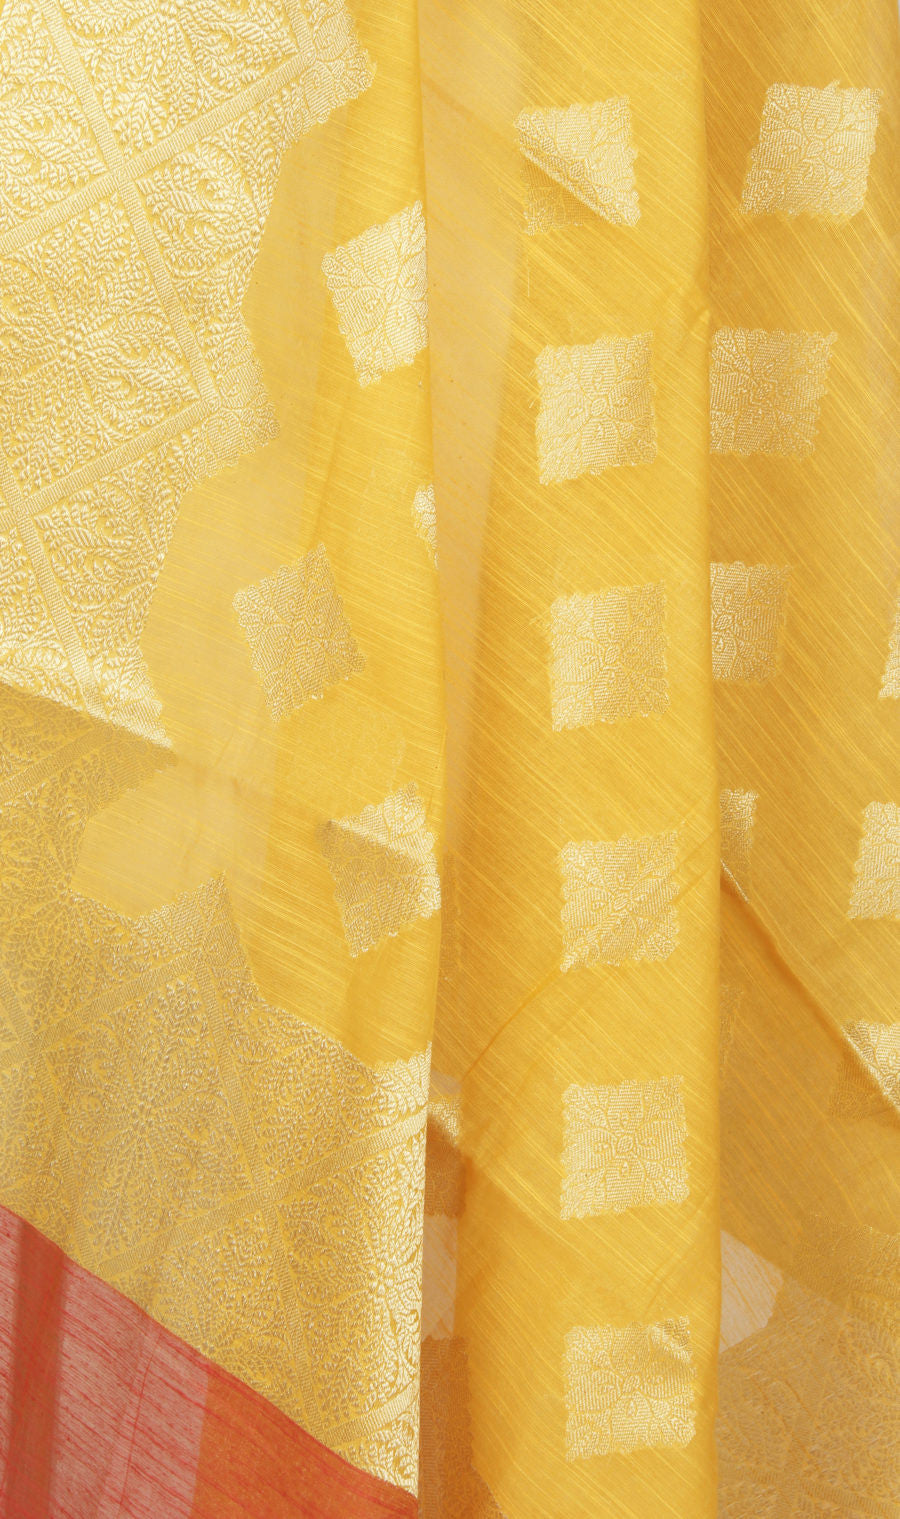 Yellow Art Silk Cotton Banarasi Dupatta with diamond shape floral motifs (2) Close up